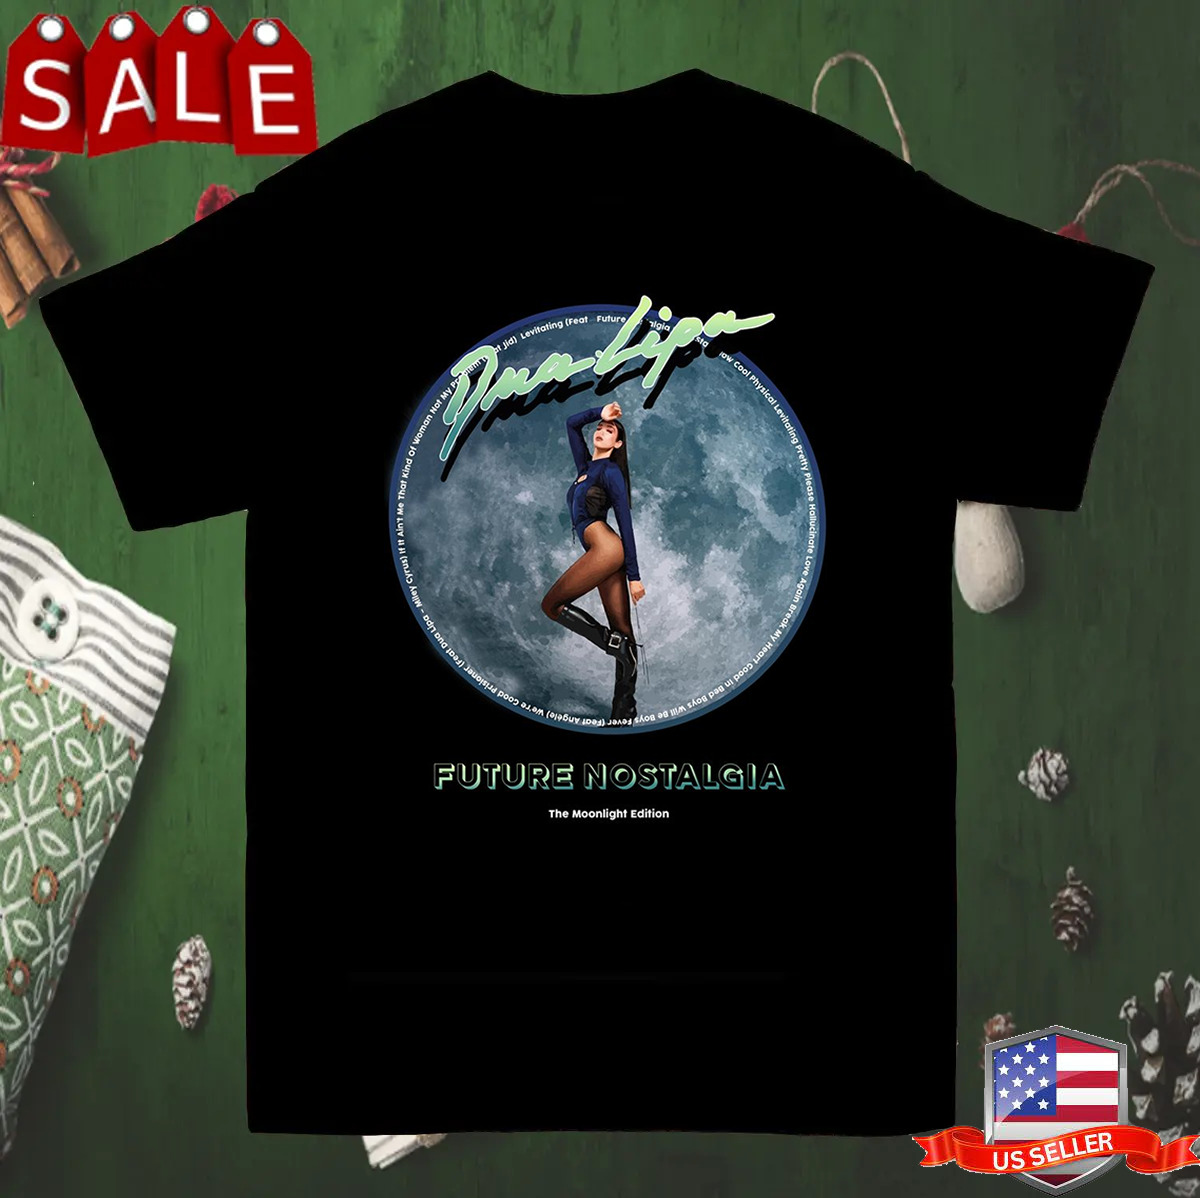 Dua Lipa Future Nostalgia Moonlight Edition T Shirt Full Size S-5XL